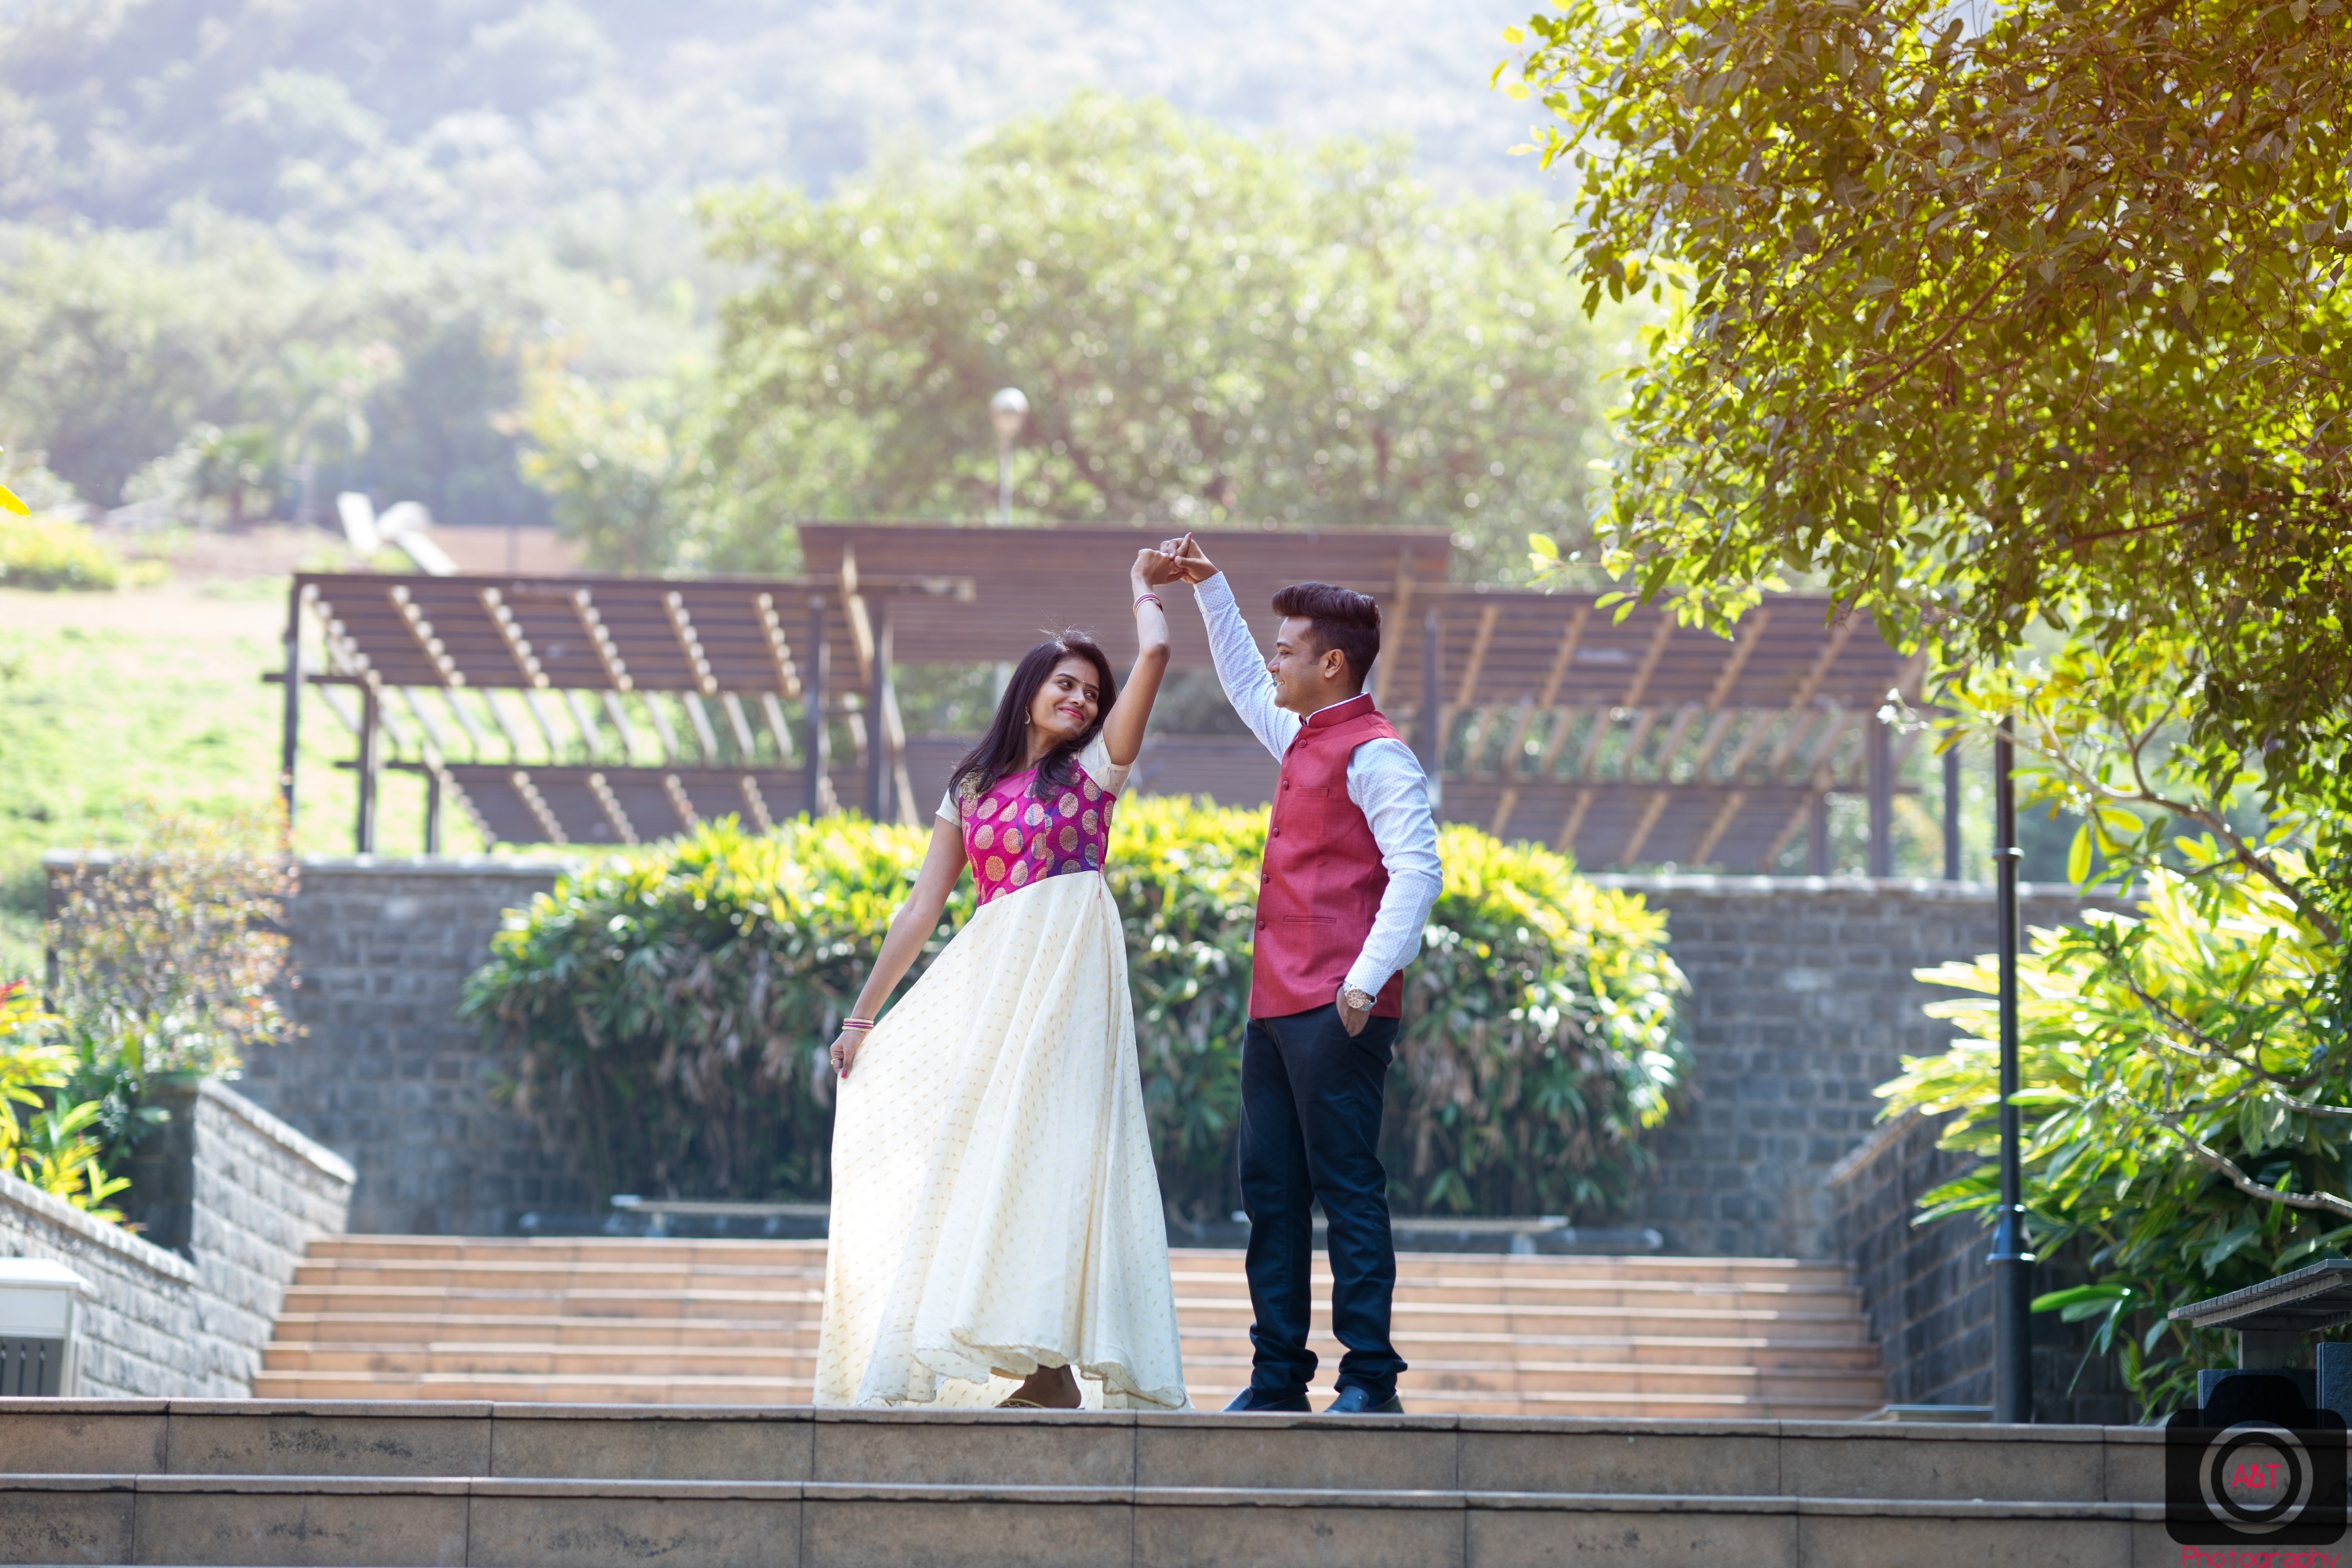 New Pre wedding Poses- in Pune-India-Lavasa